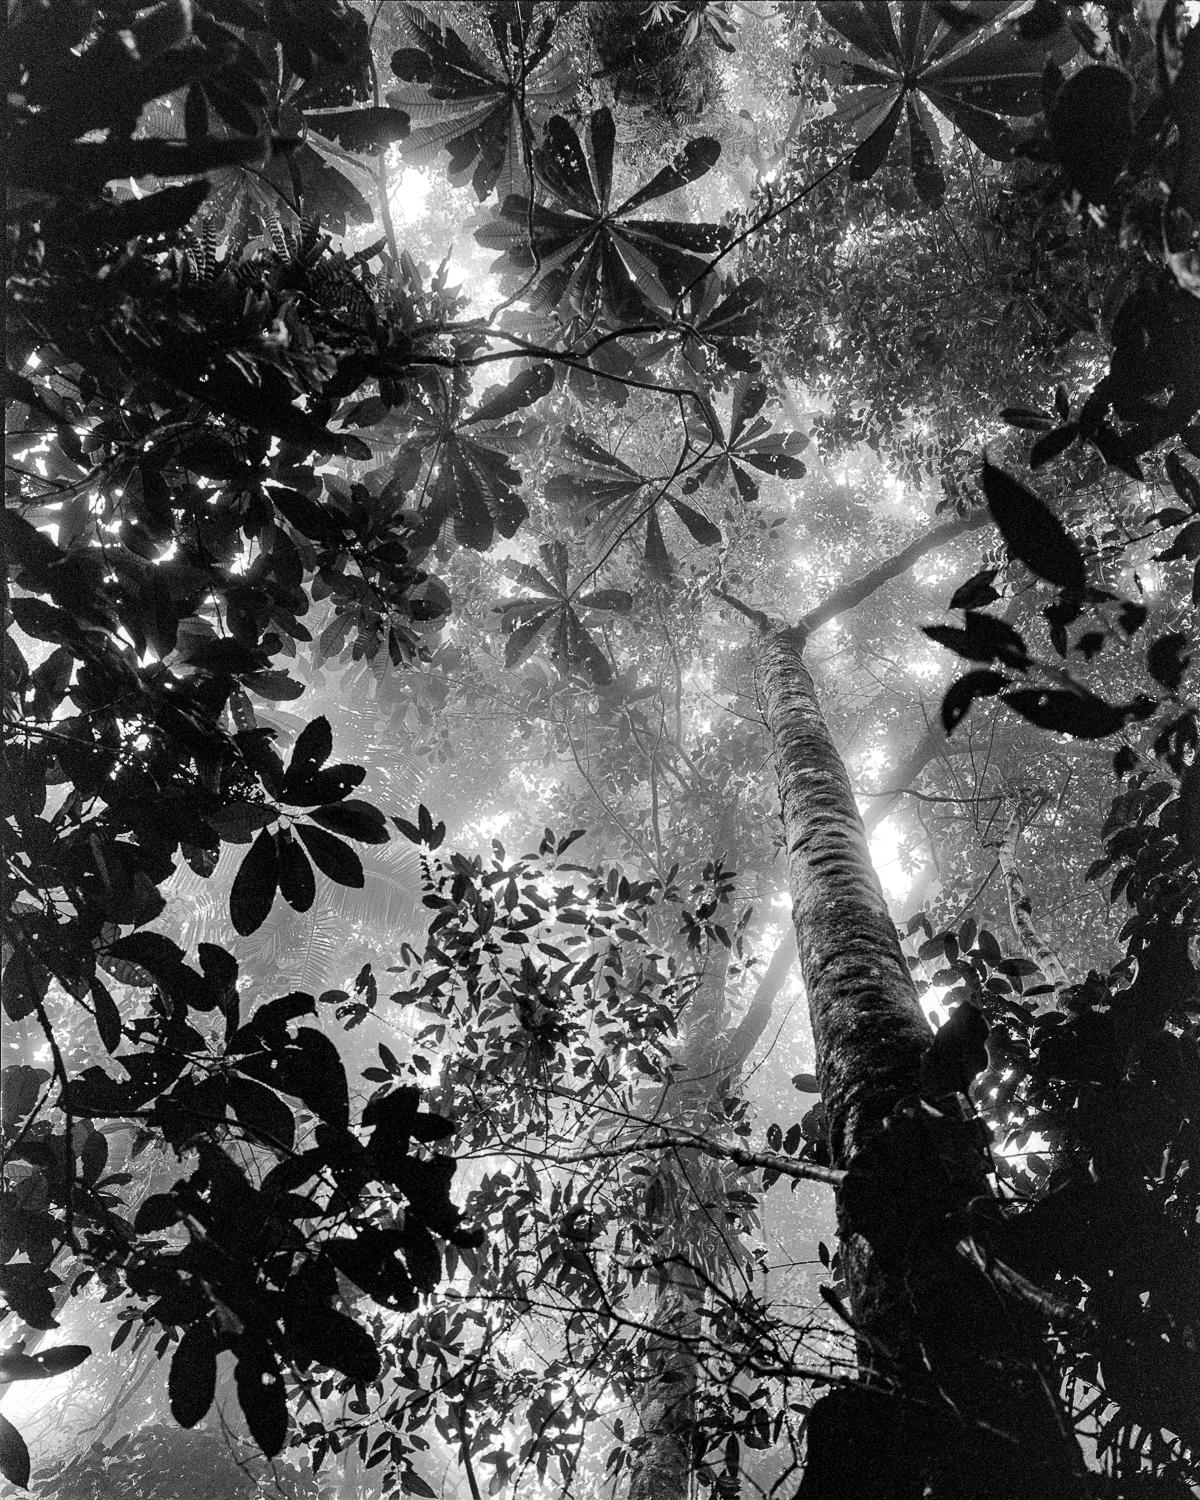 Miguel Winograd  Black and White Photograph - Bosque Tropical Húmedo Nuquí, Pigment Prints